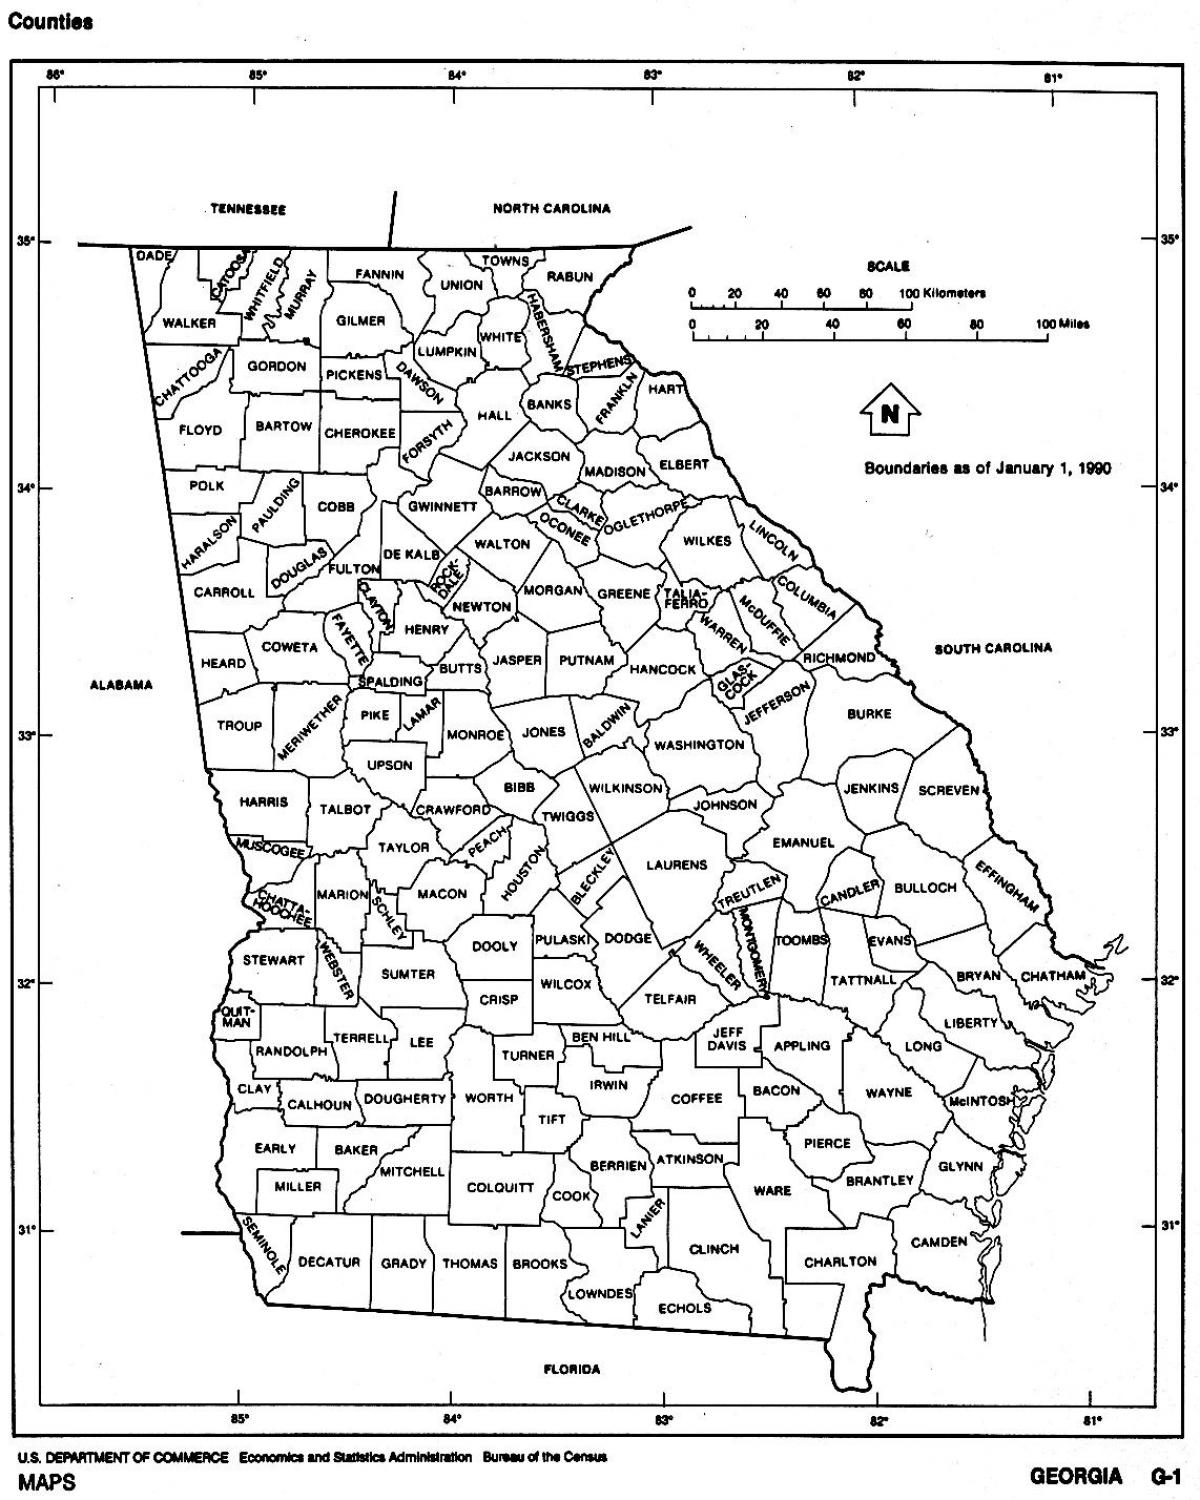 Georgia state hartë